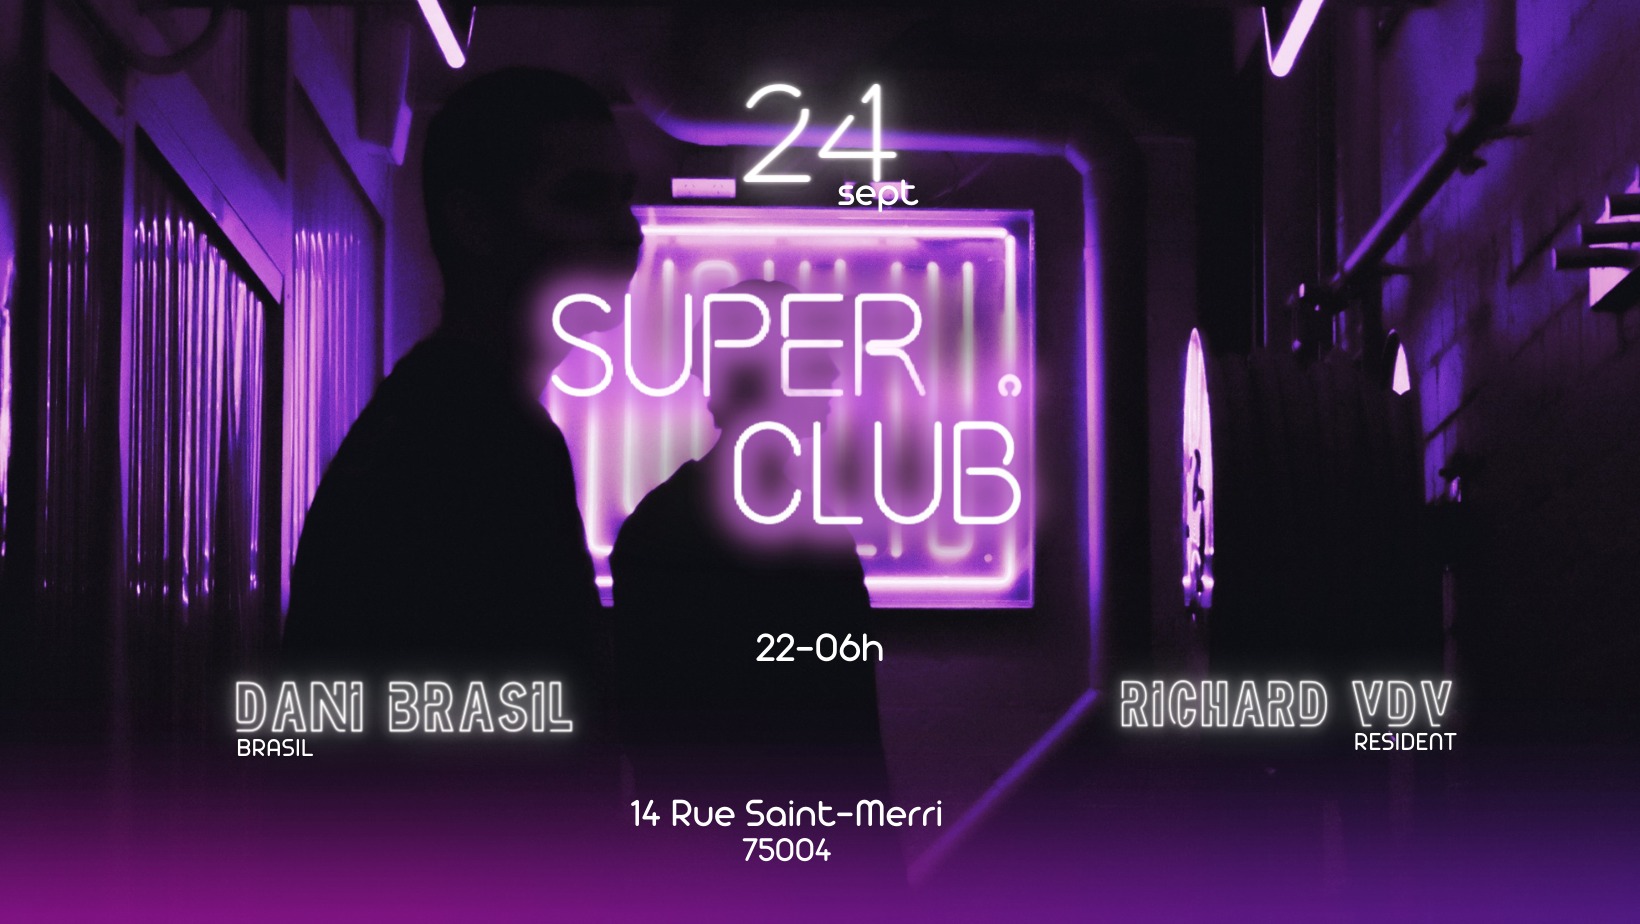 Superclub - 24-09-2022.jpg (246 KB)